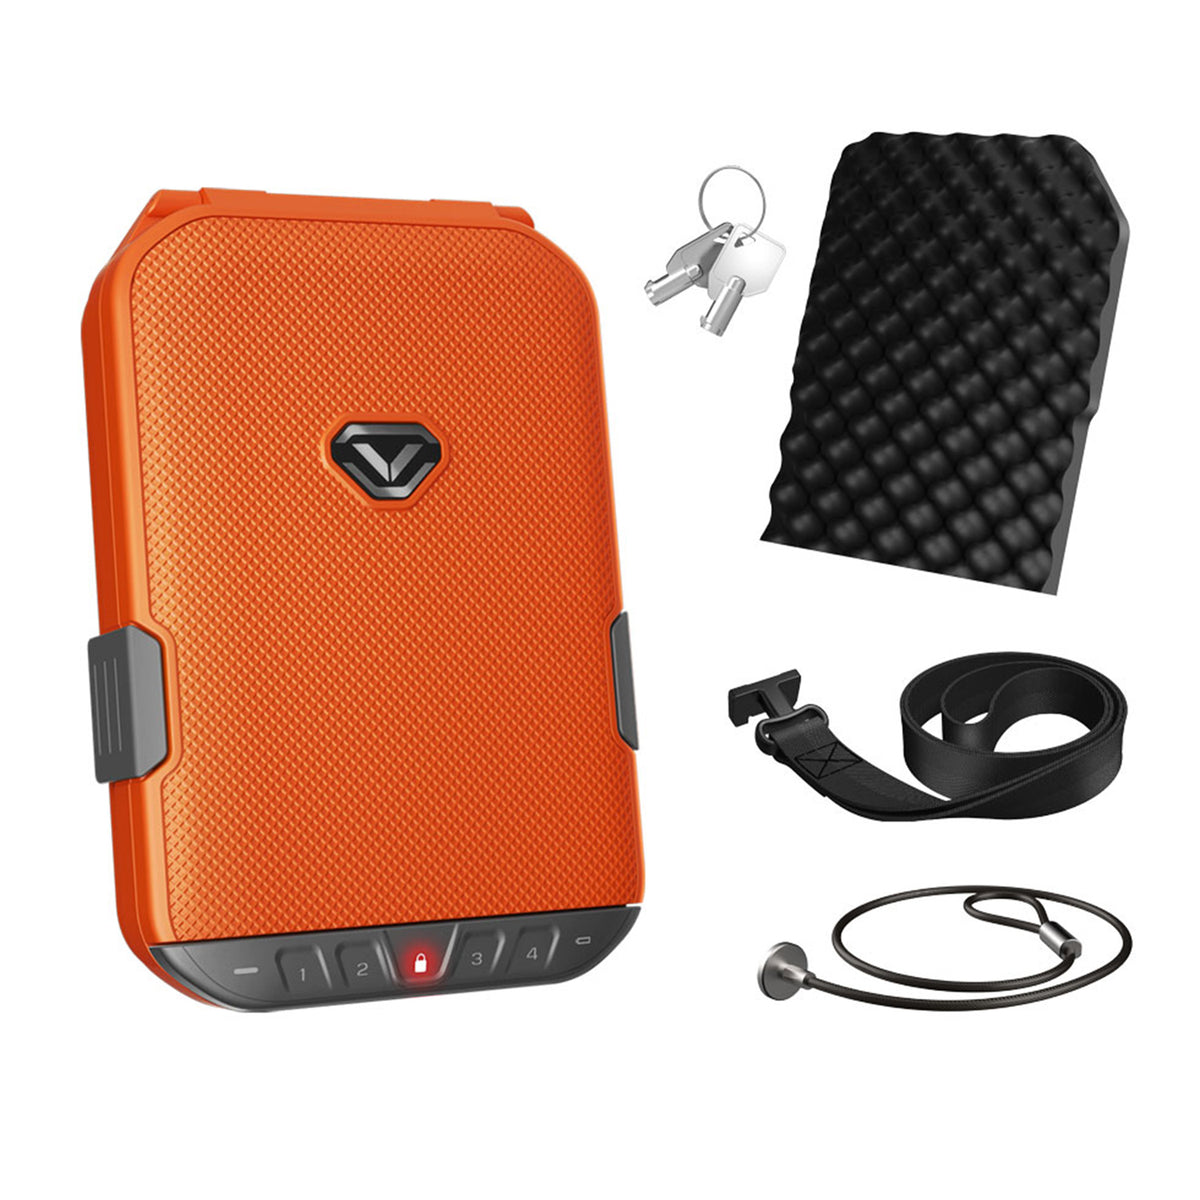 Vaultek - lifepod 1.0 slingbag - Rush orange Lifepod and Heather Gray slingbag - accessories - MODLOCK